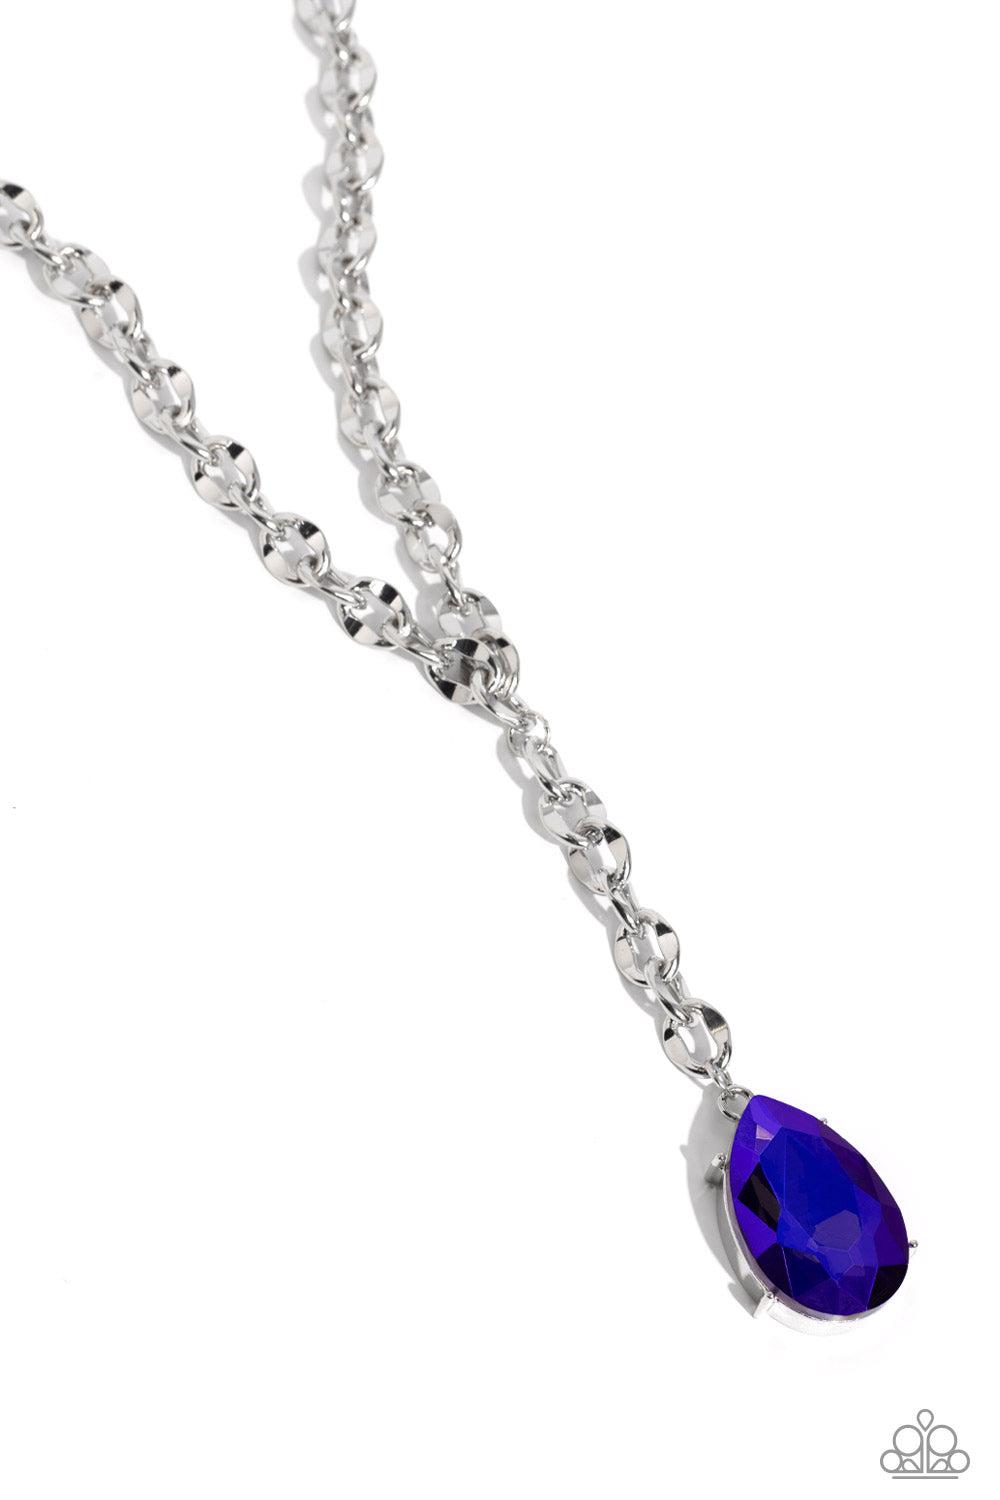 Benevolent Bling Purple Rhinestone Necklace - Paparazzi Accessories- lightbox - CarasShop.com - $5 Jewelry by Cara Jewels